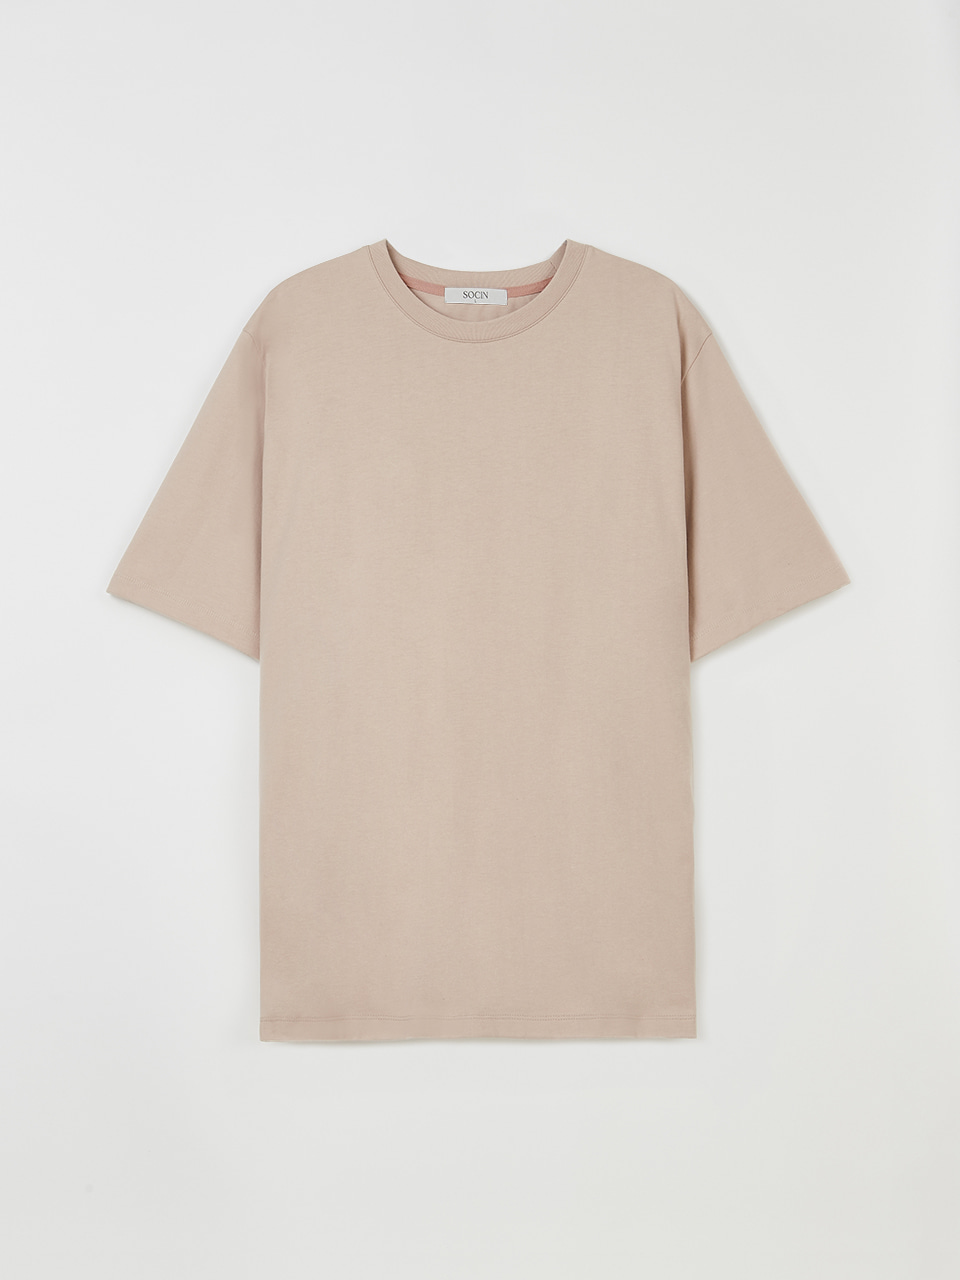 Essential Half Sleeve T-Shirt (Pink Beige)